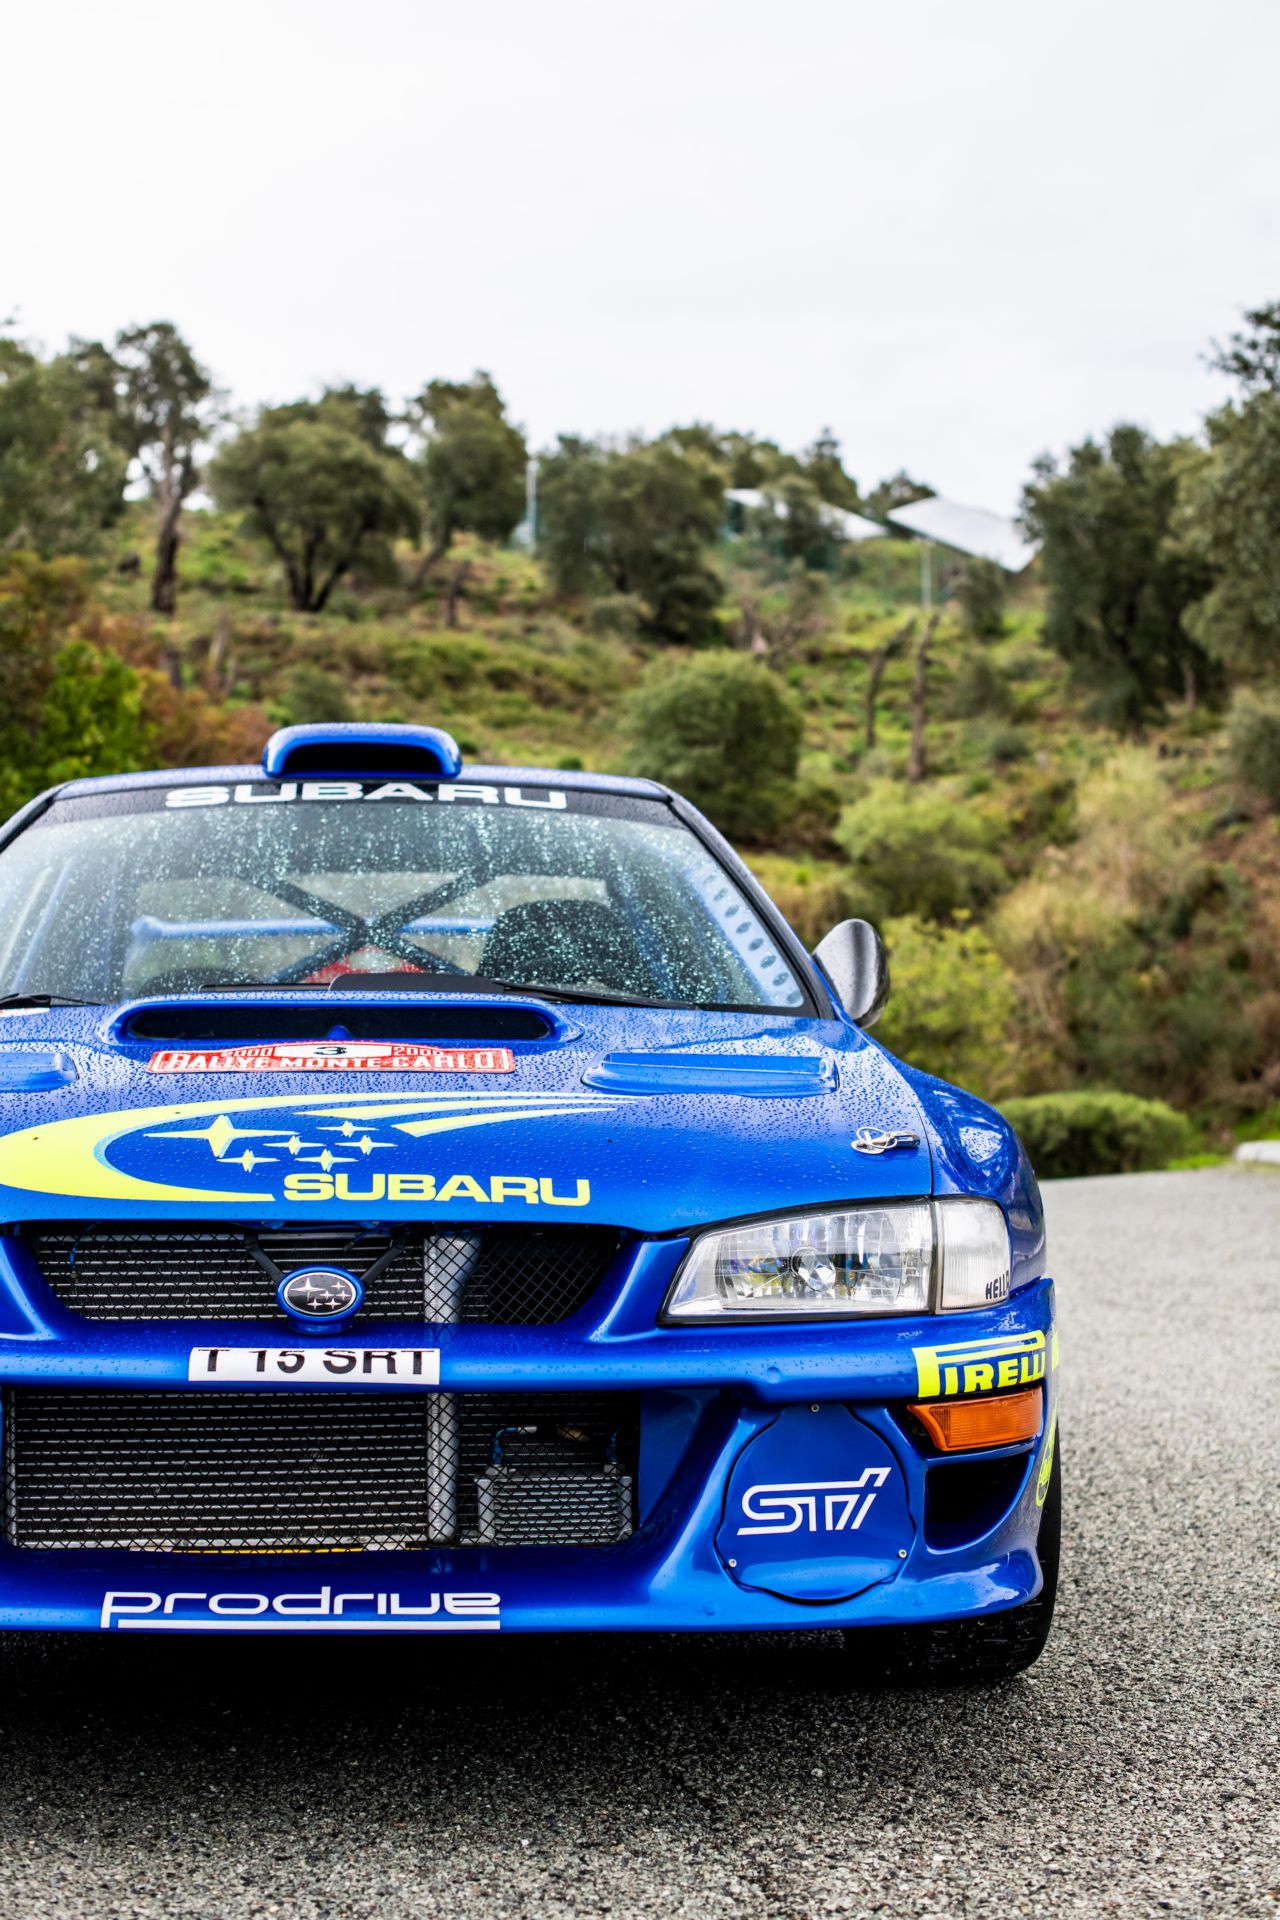 Subaru-Impreza-WRC-Richard-Burns-auction-48